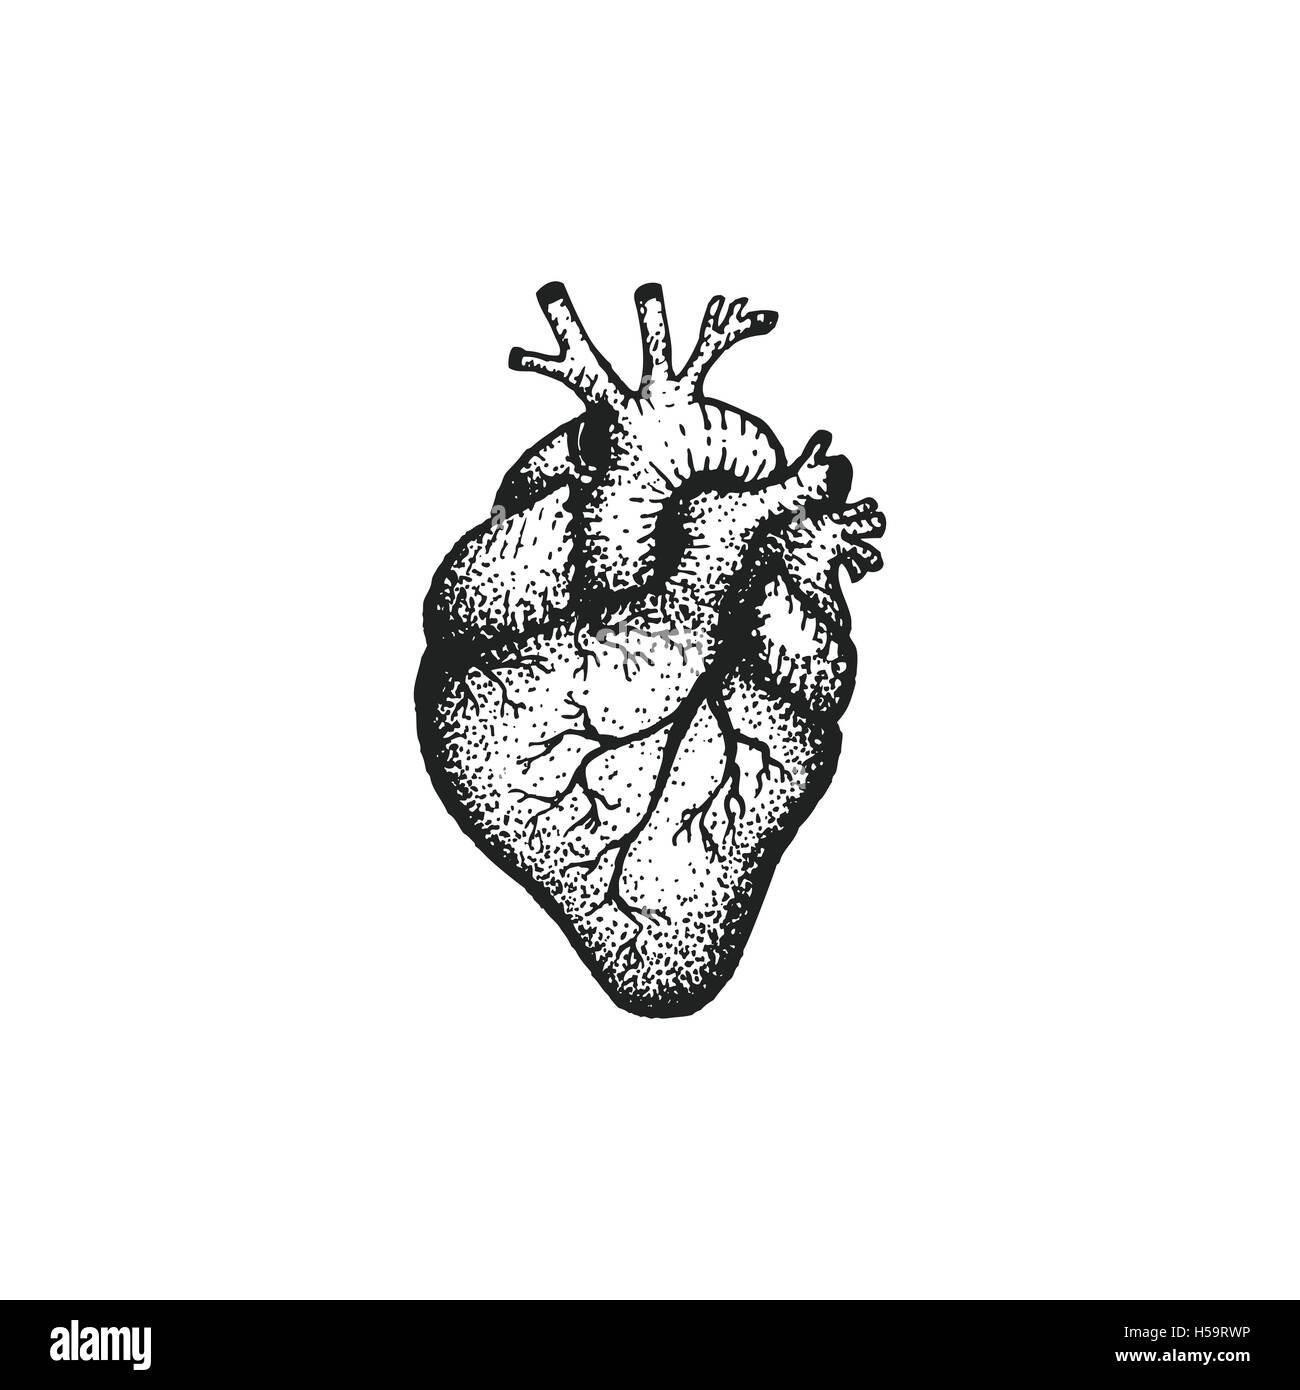 Heart vectors etching Stock Vector Images - Alamy